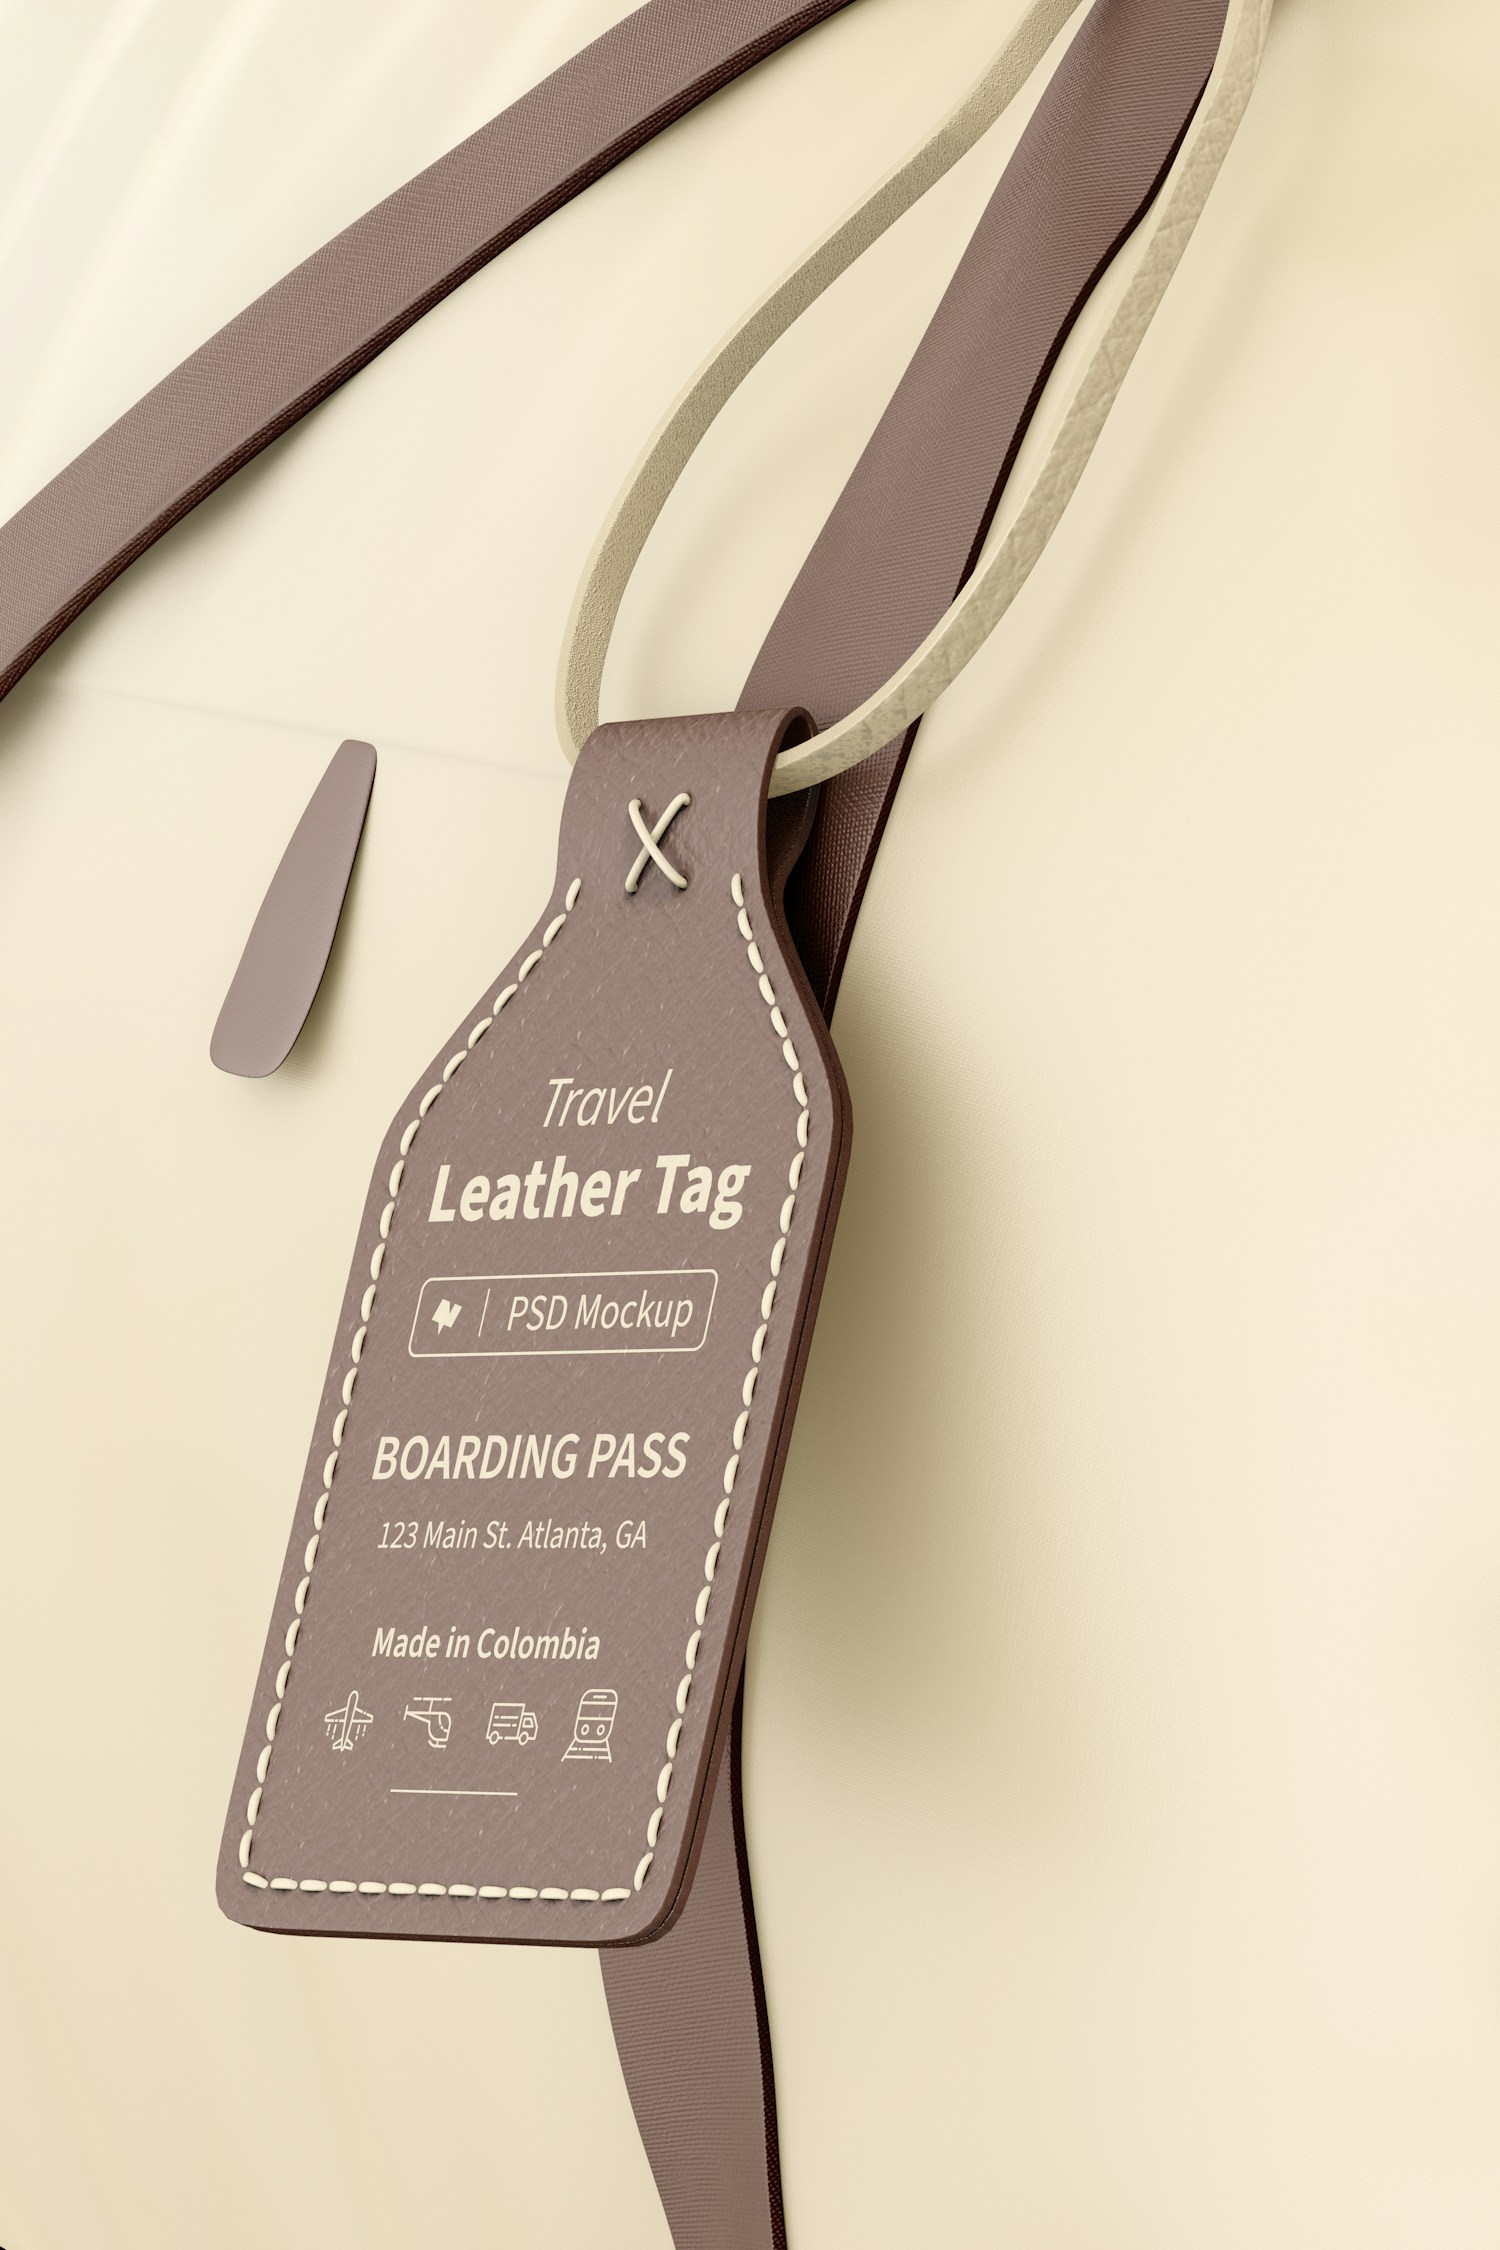 Travel Leather Tag Mockup, on Bag